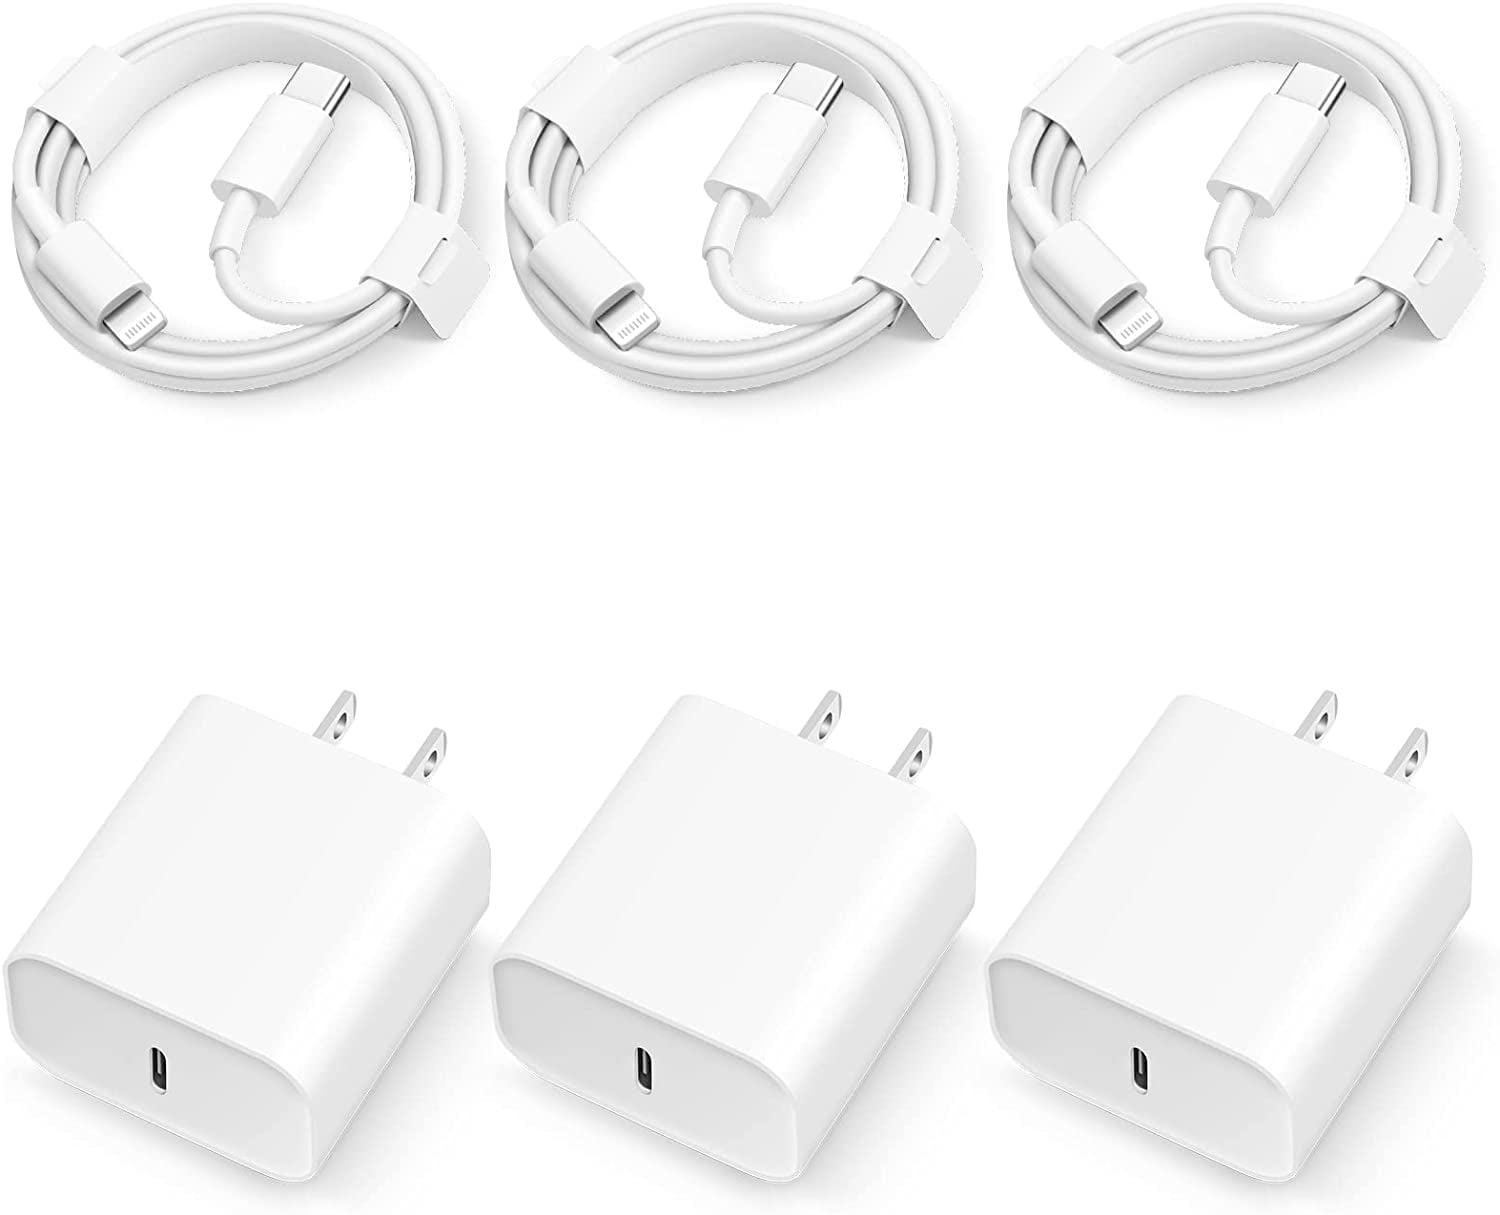 Chargeur Rapide iPhone 13 14, Apple MFi Certified 20W USB C Chargeur iPhone  avec câble de